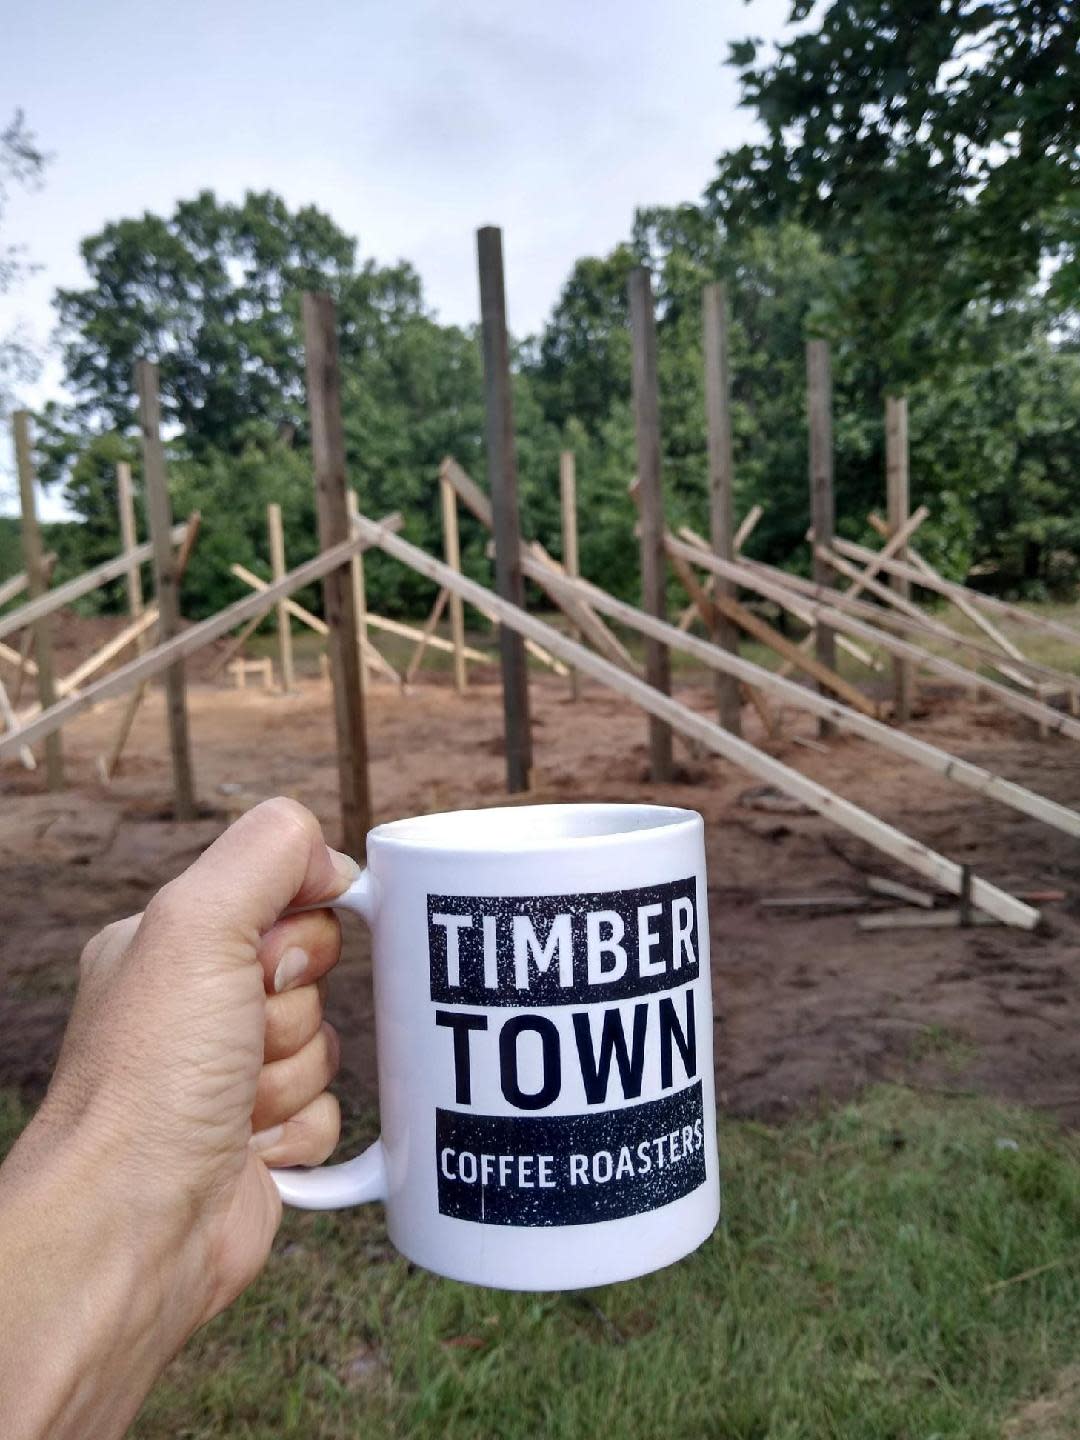 A mug with the Timberown logo